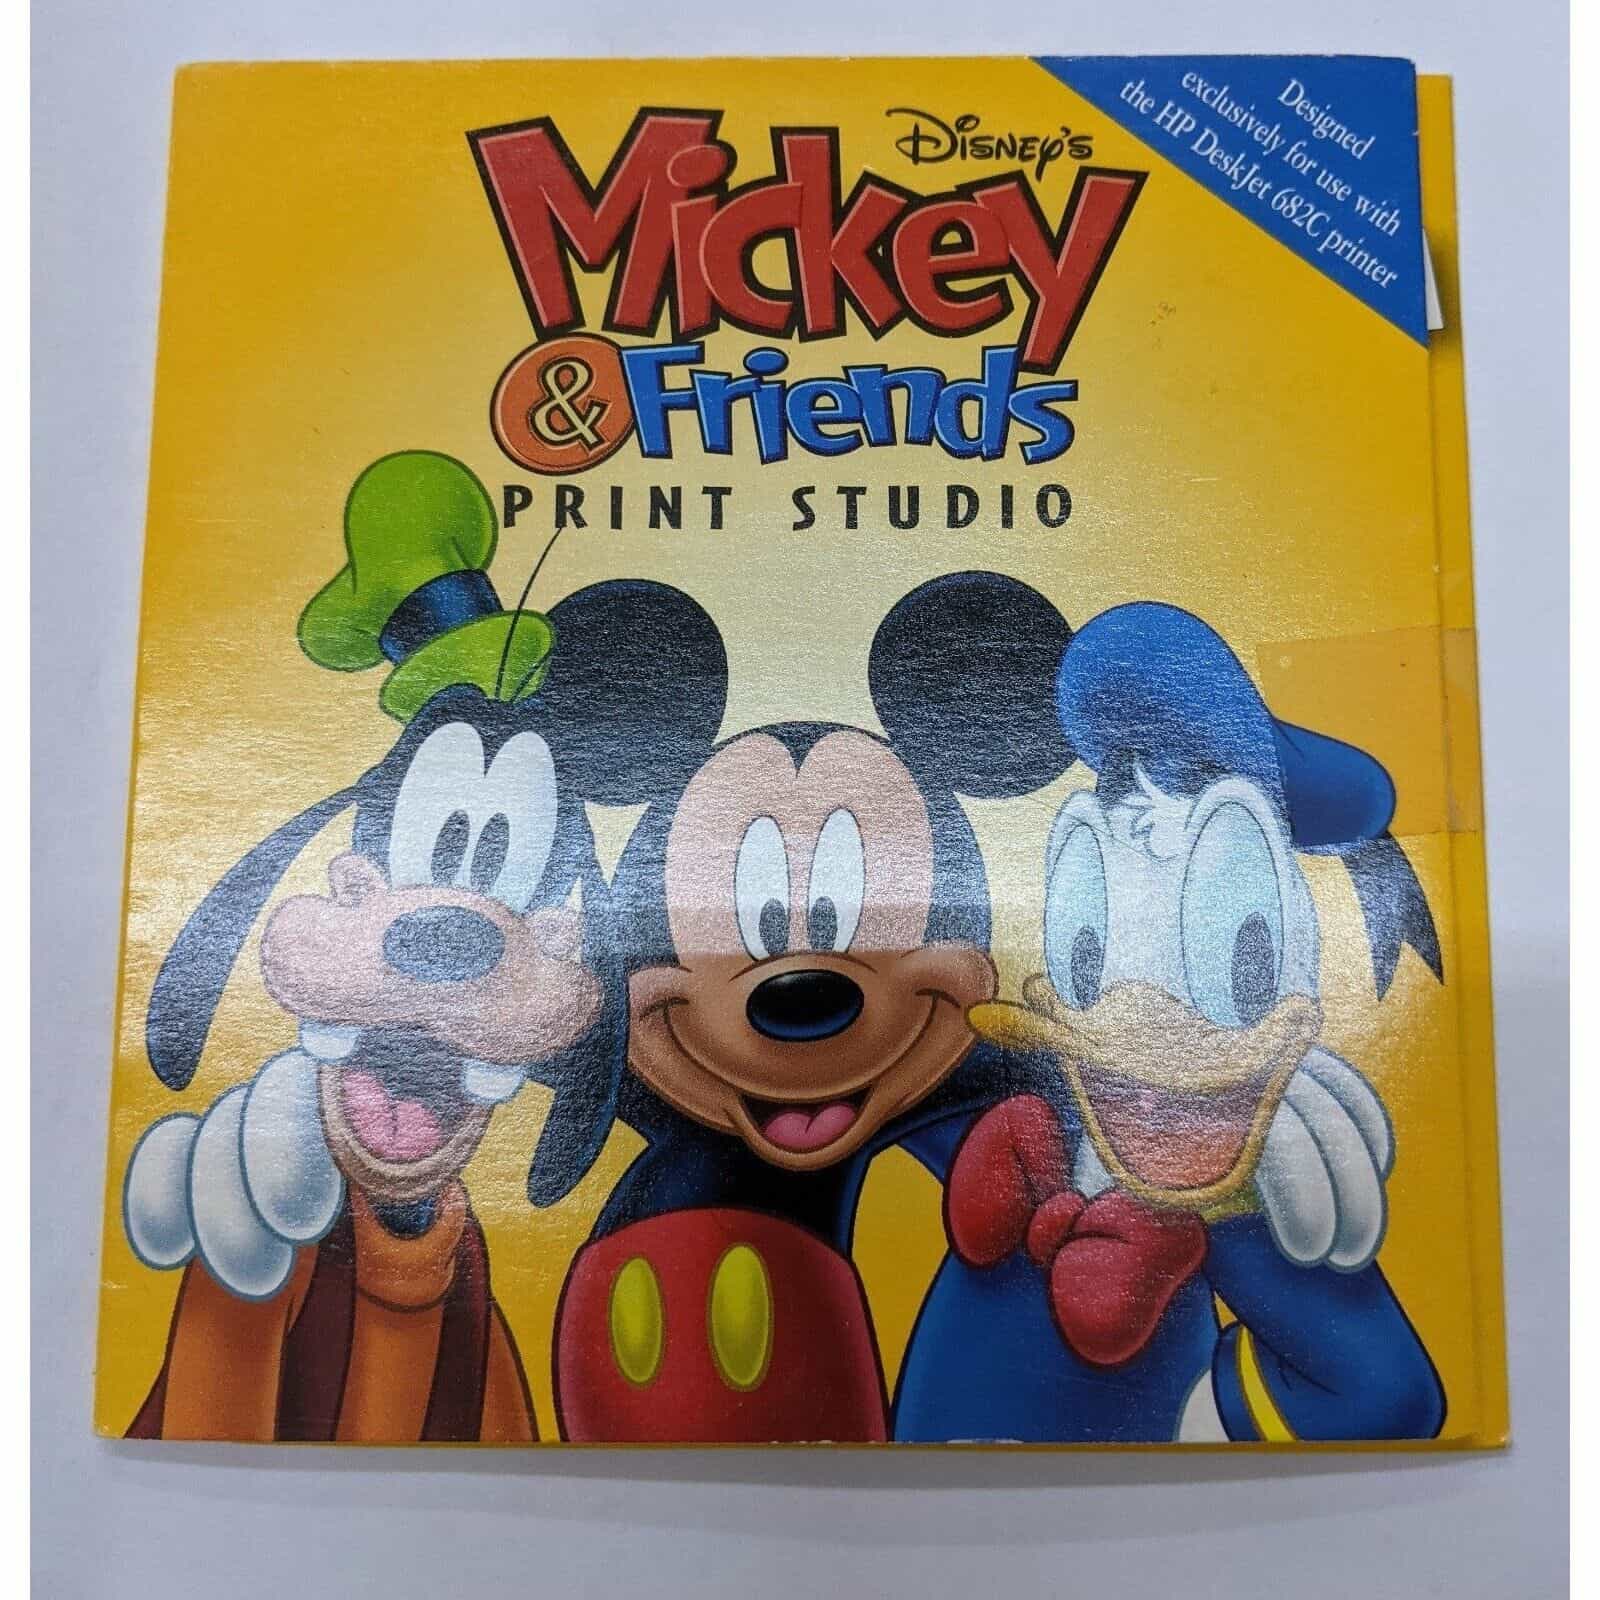 Disney’s Mickey & Friends Print Studio